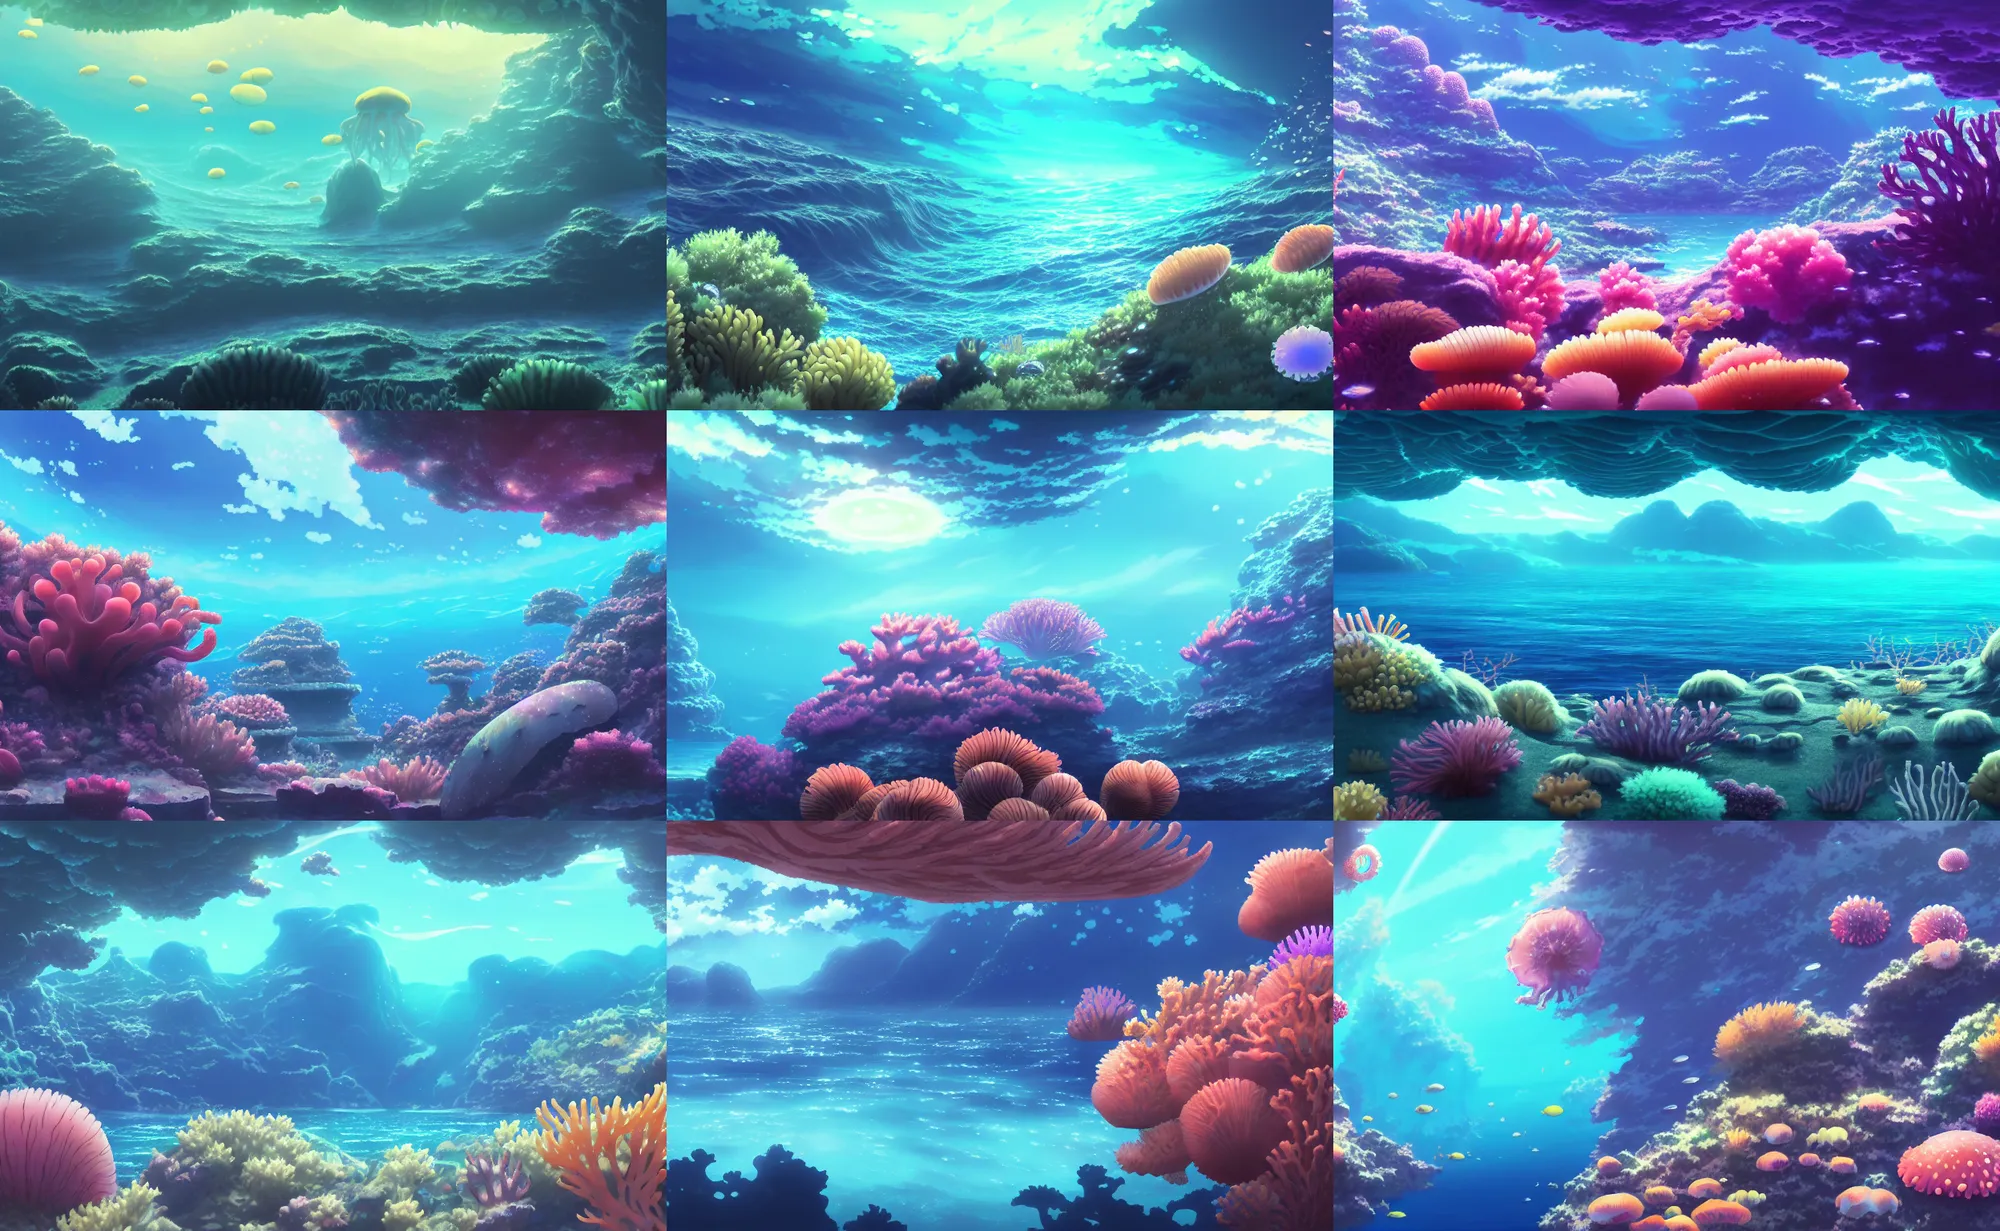 Prompt: an anime movie background matte painting of an underwater ocean reef, sea floor, caustics, coral, glowing jellyfish, fish, anemones, seaweed, by makoto shinkai, trending on artstation, highly detailed